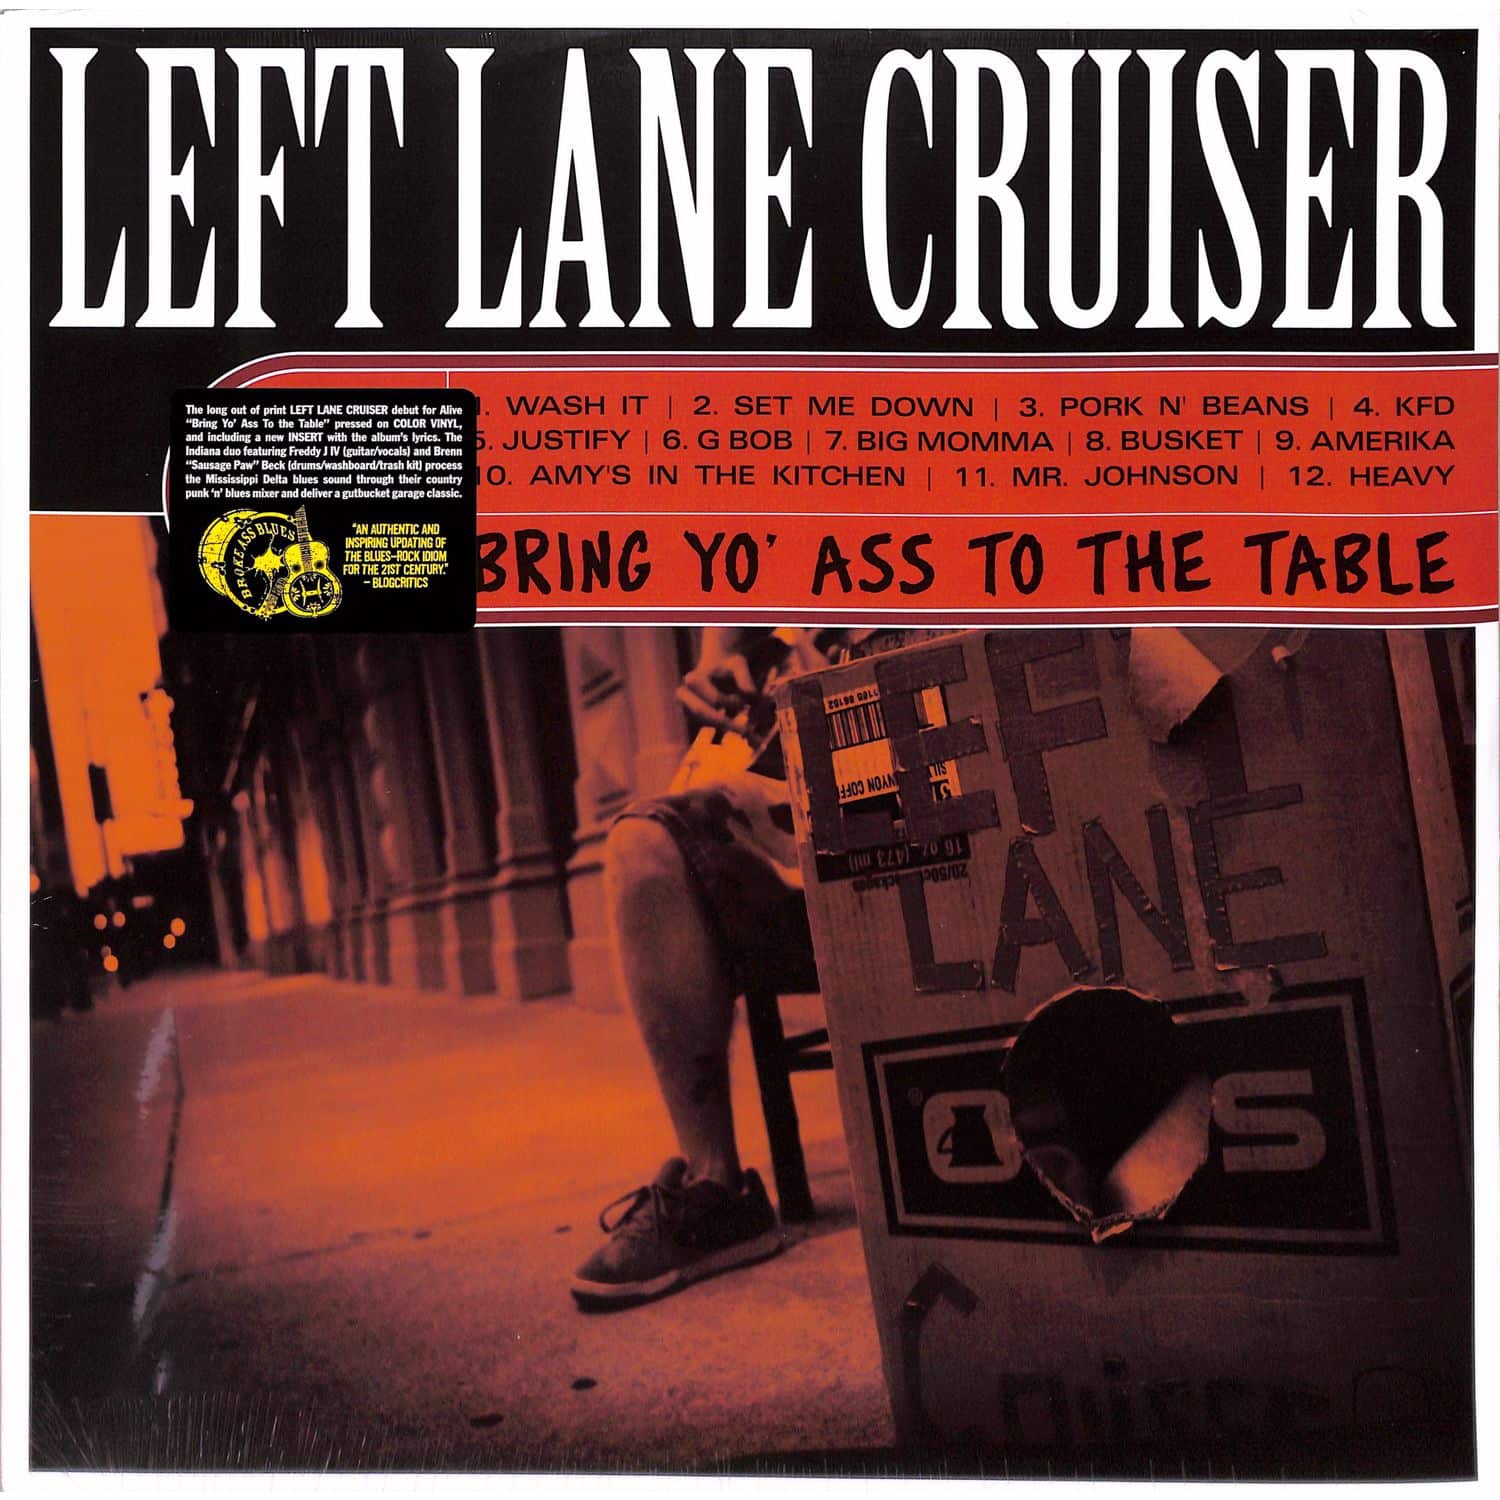 Left Lane Cruiser - BRING YO ASS TO THE TABLE 